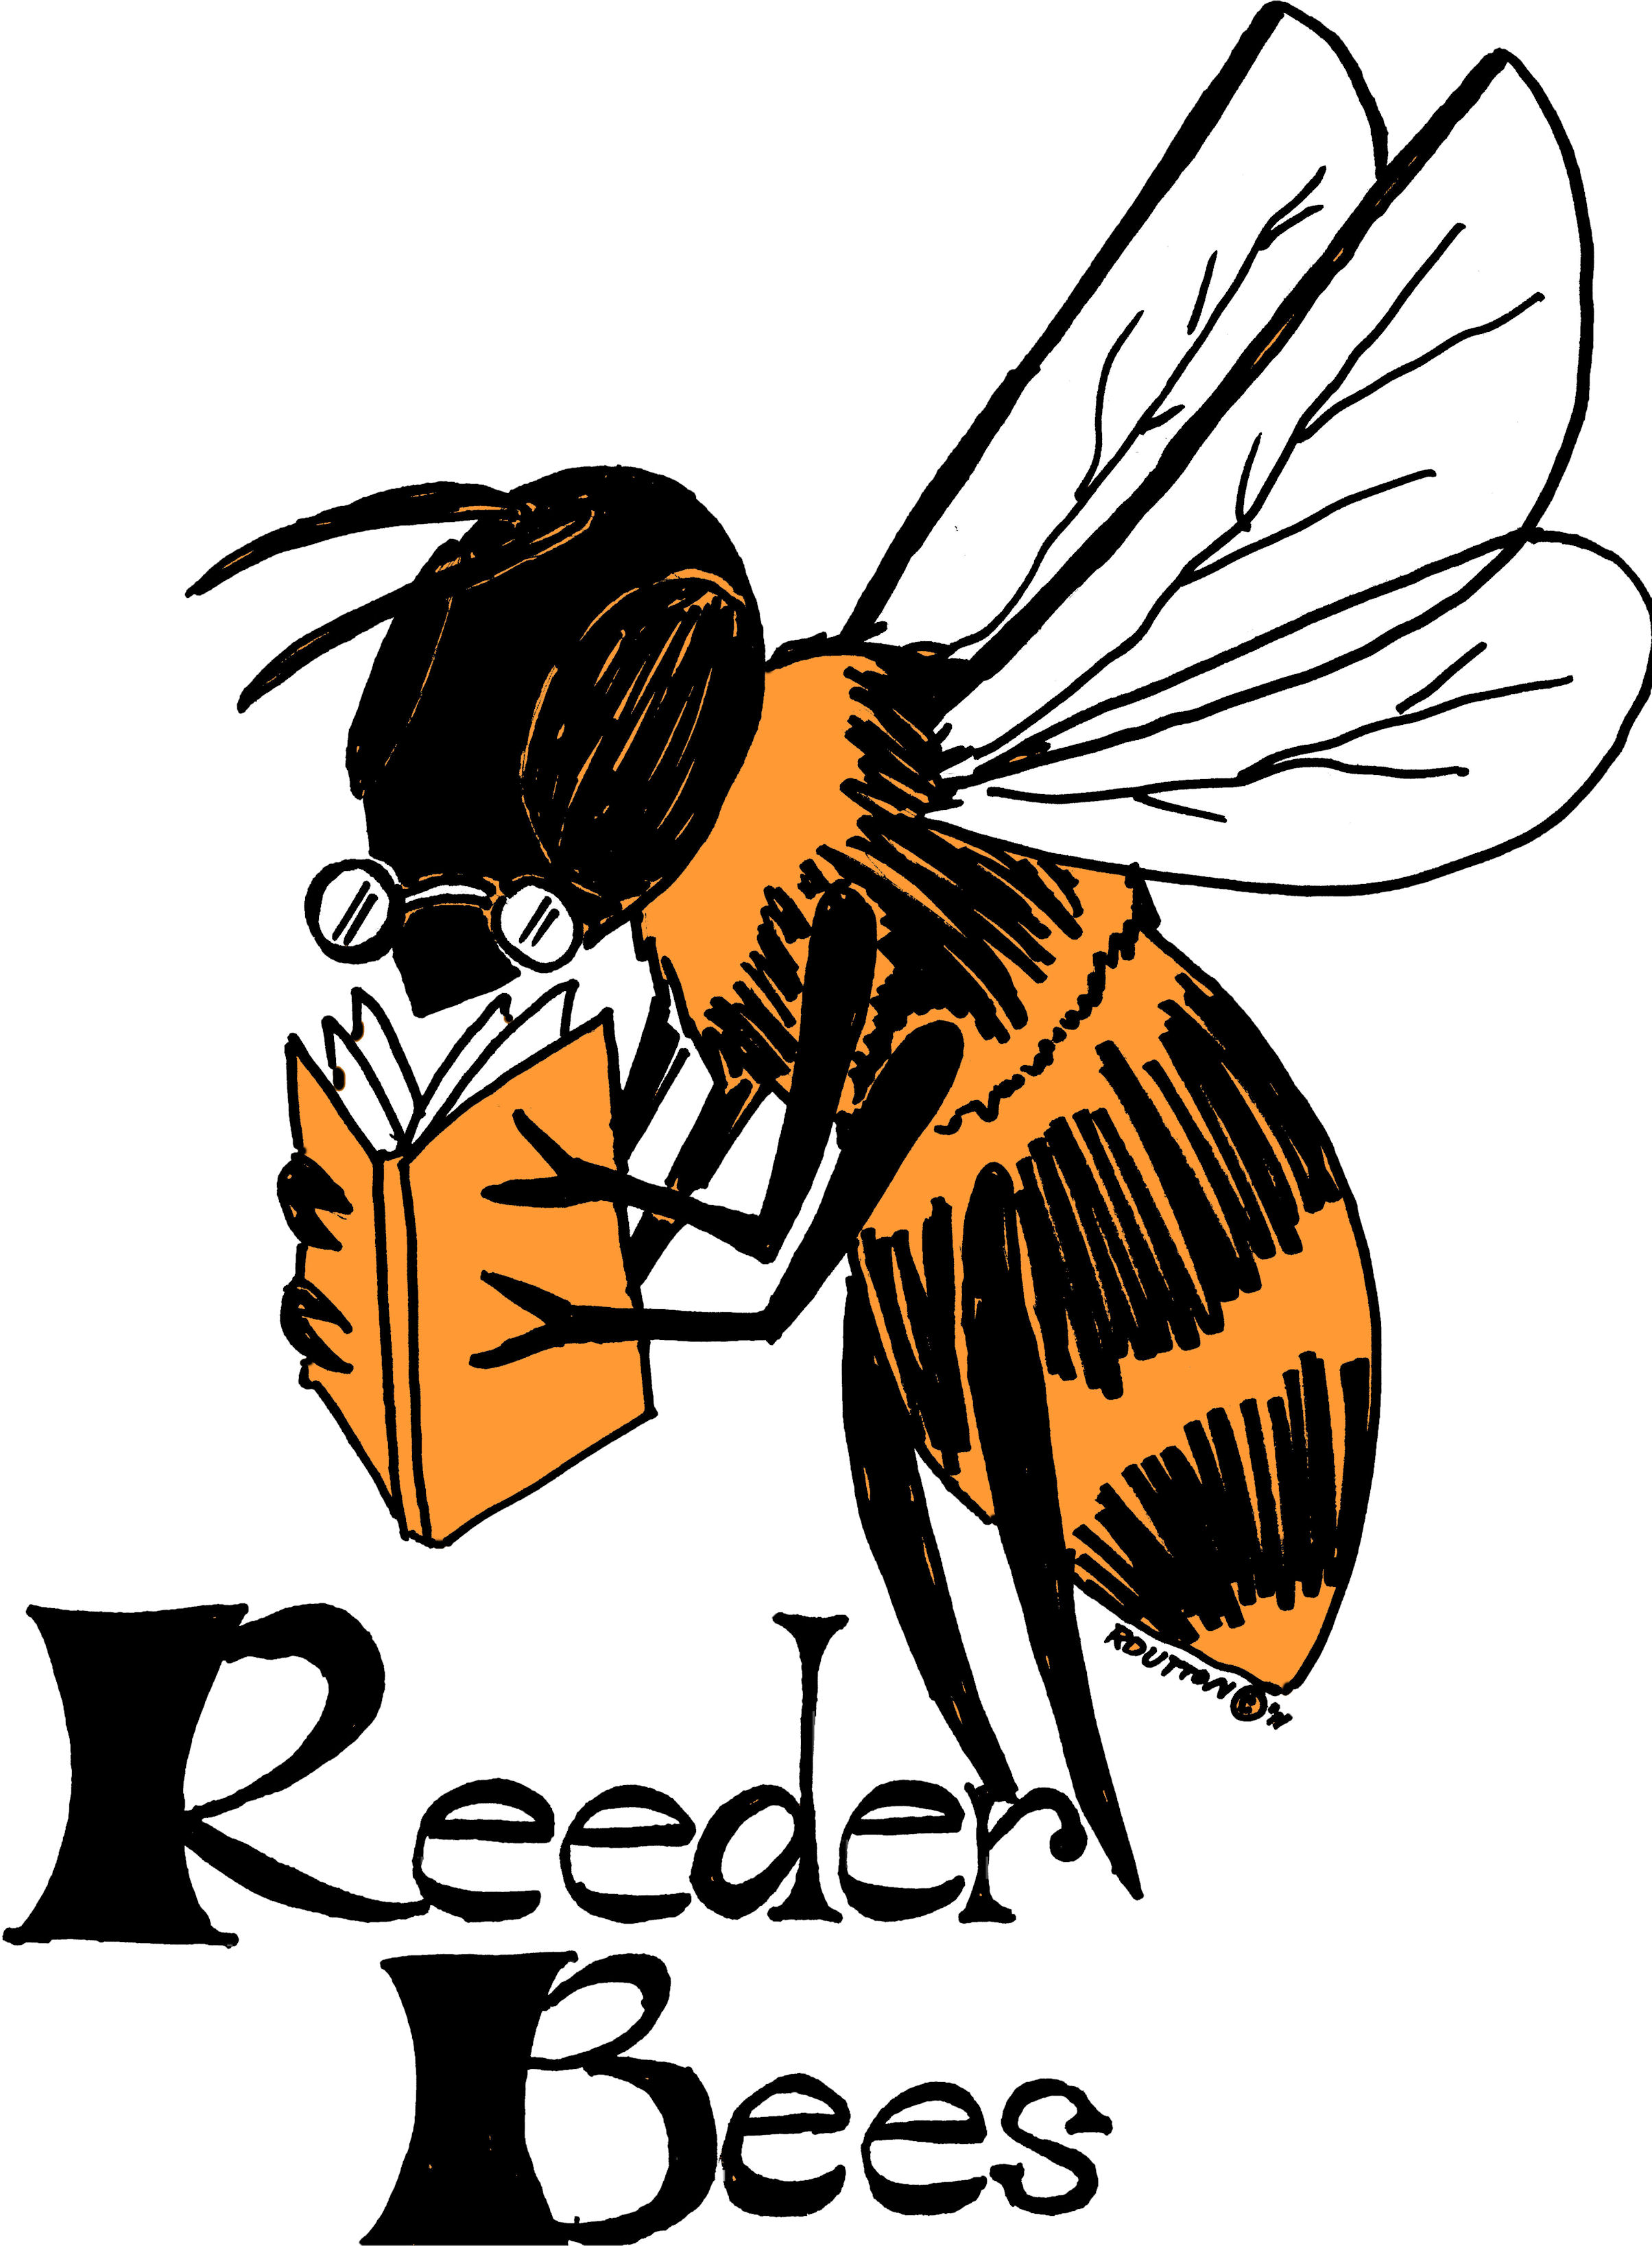 Reeder Bees